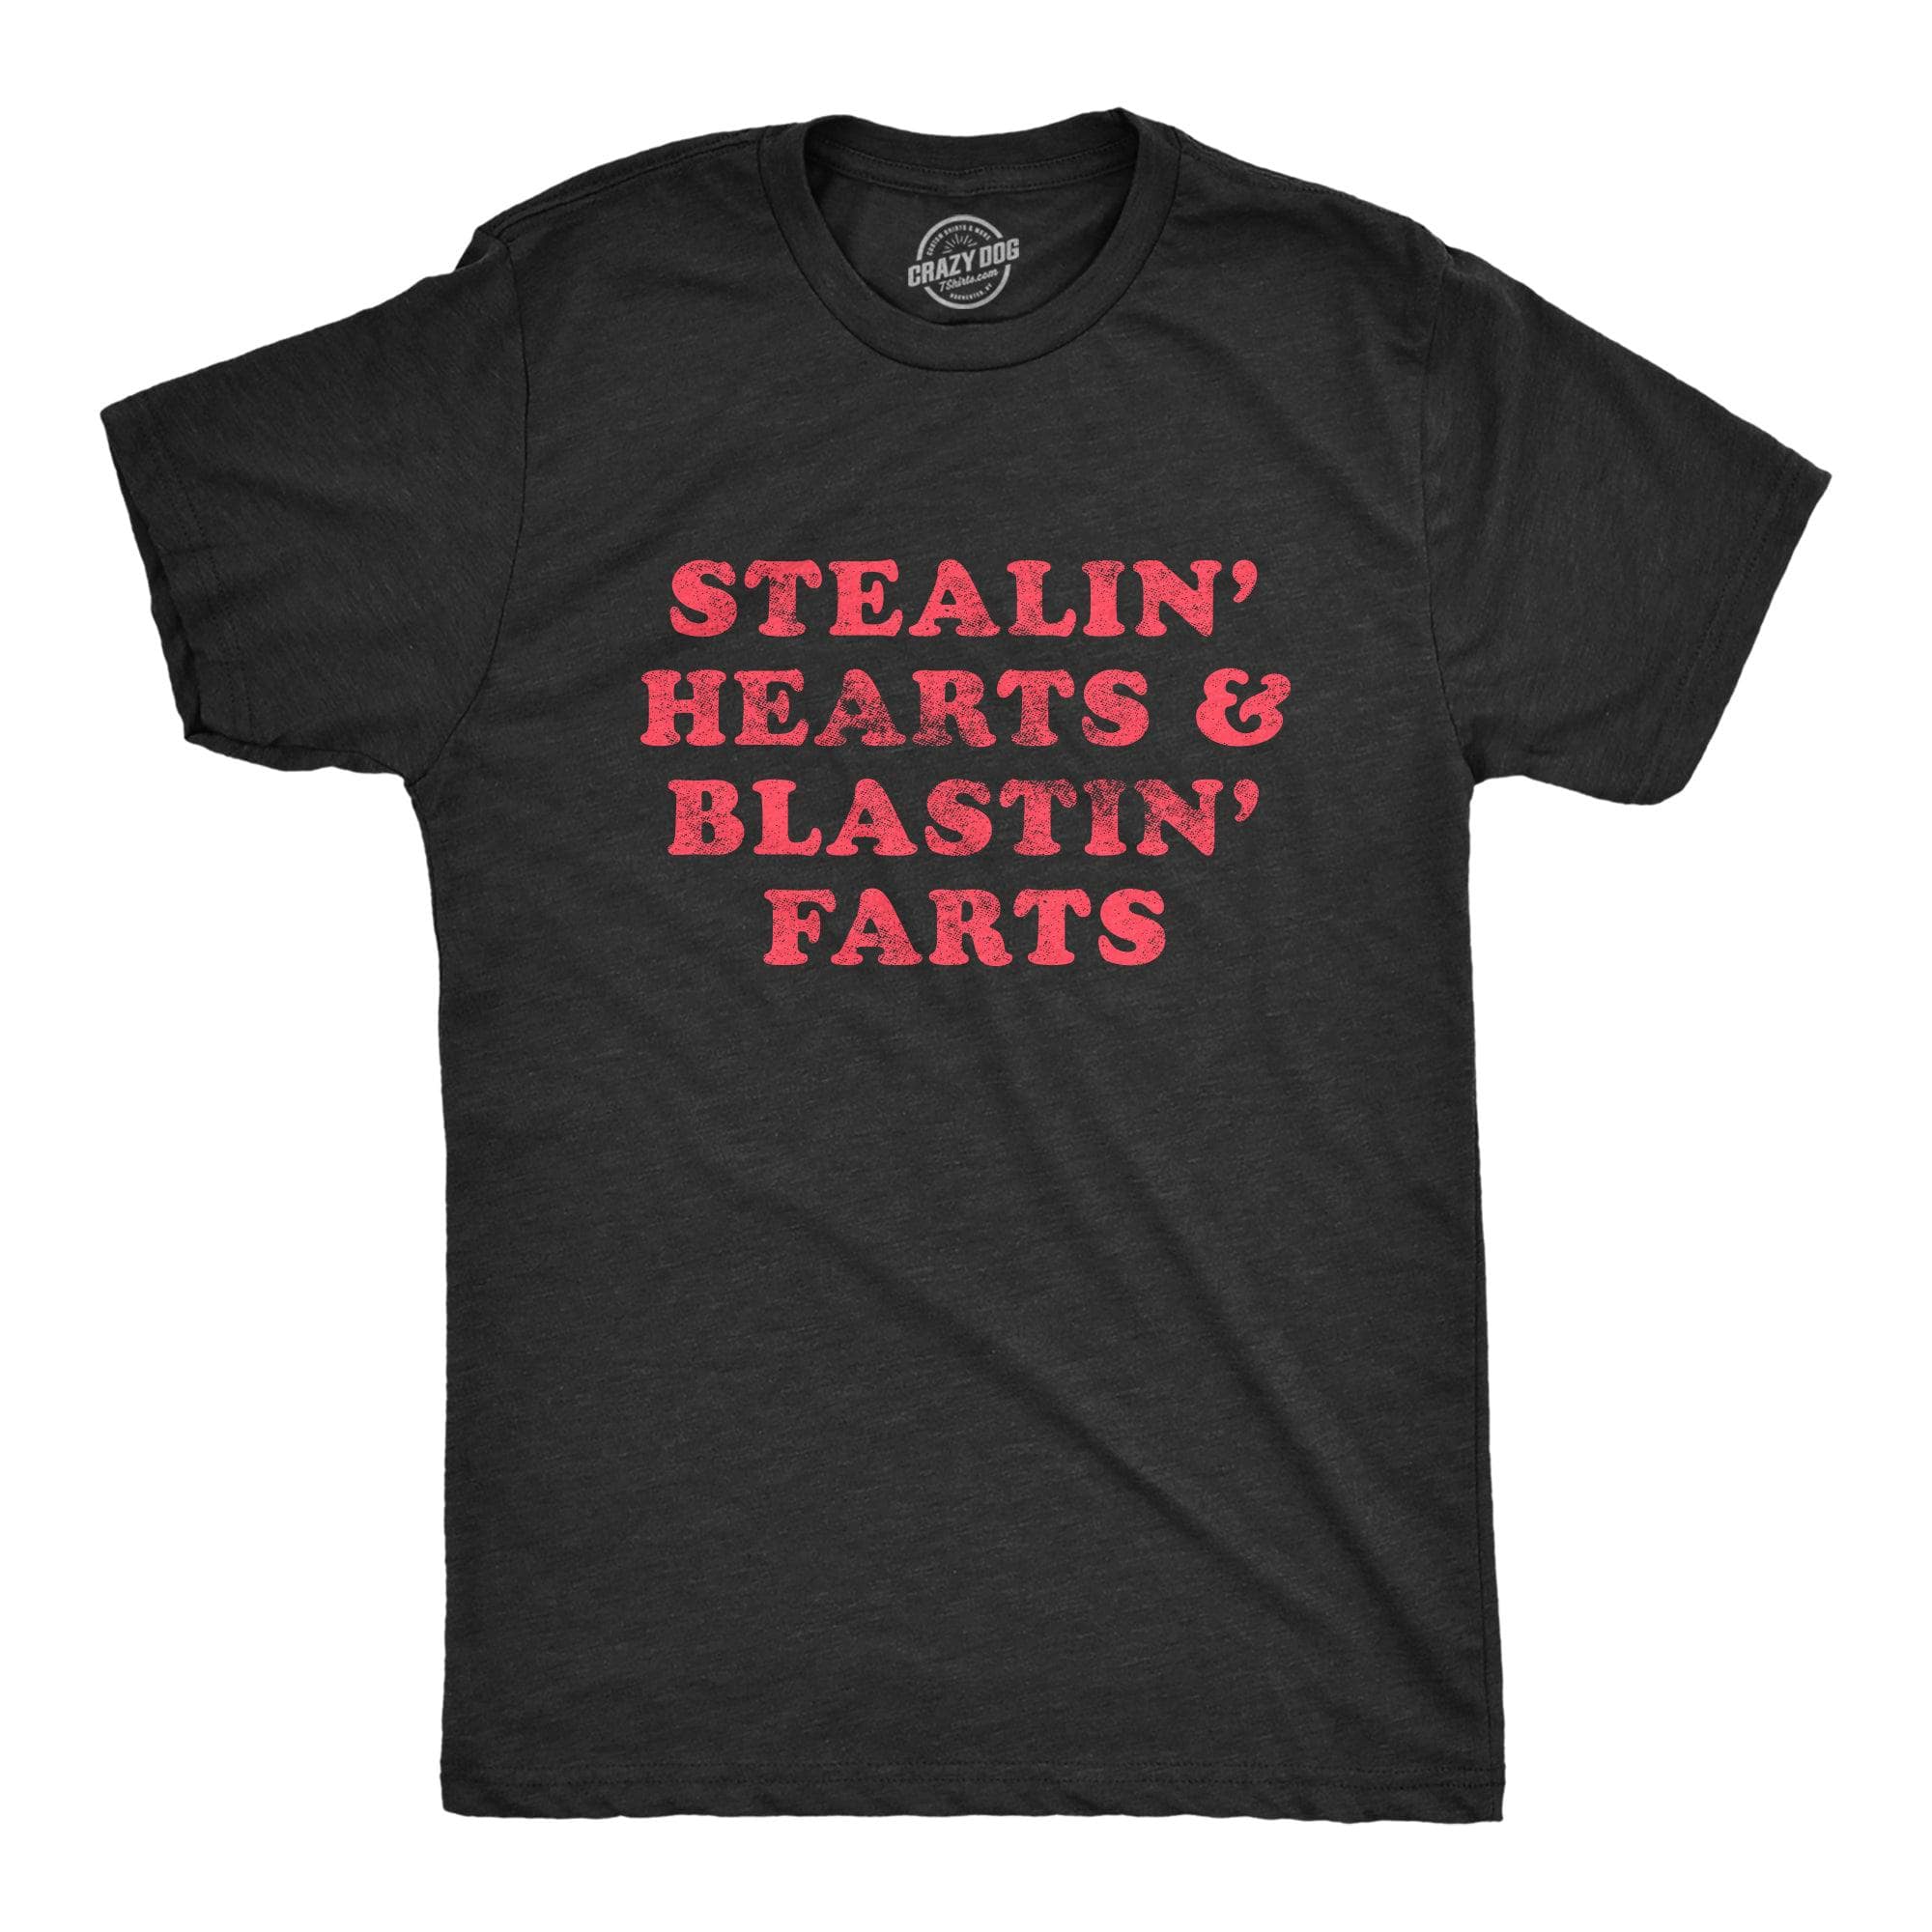 Stealin' Hearts And Blastin' Farts Men's Tshirt  -  Crazy Dog T-Shirts